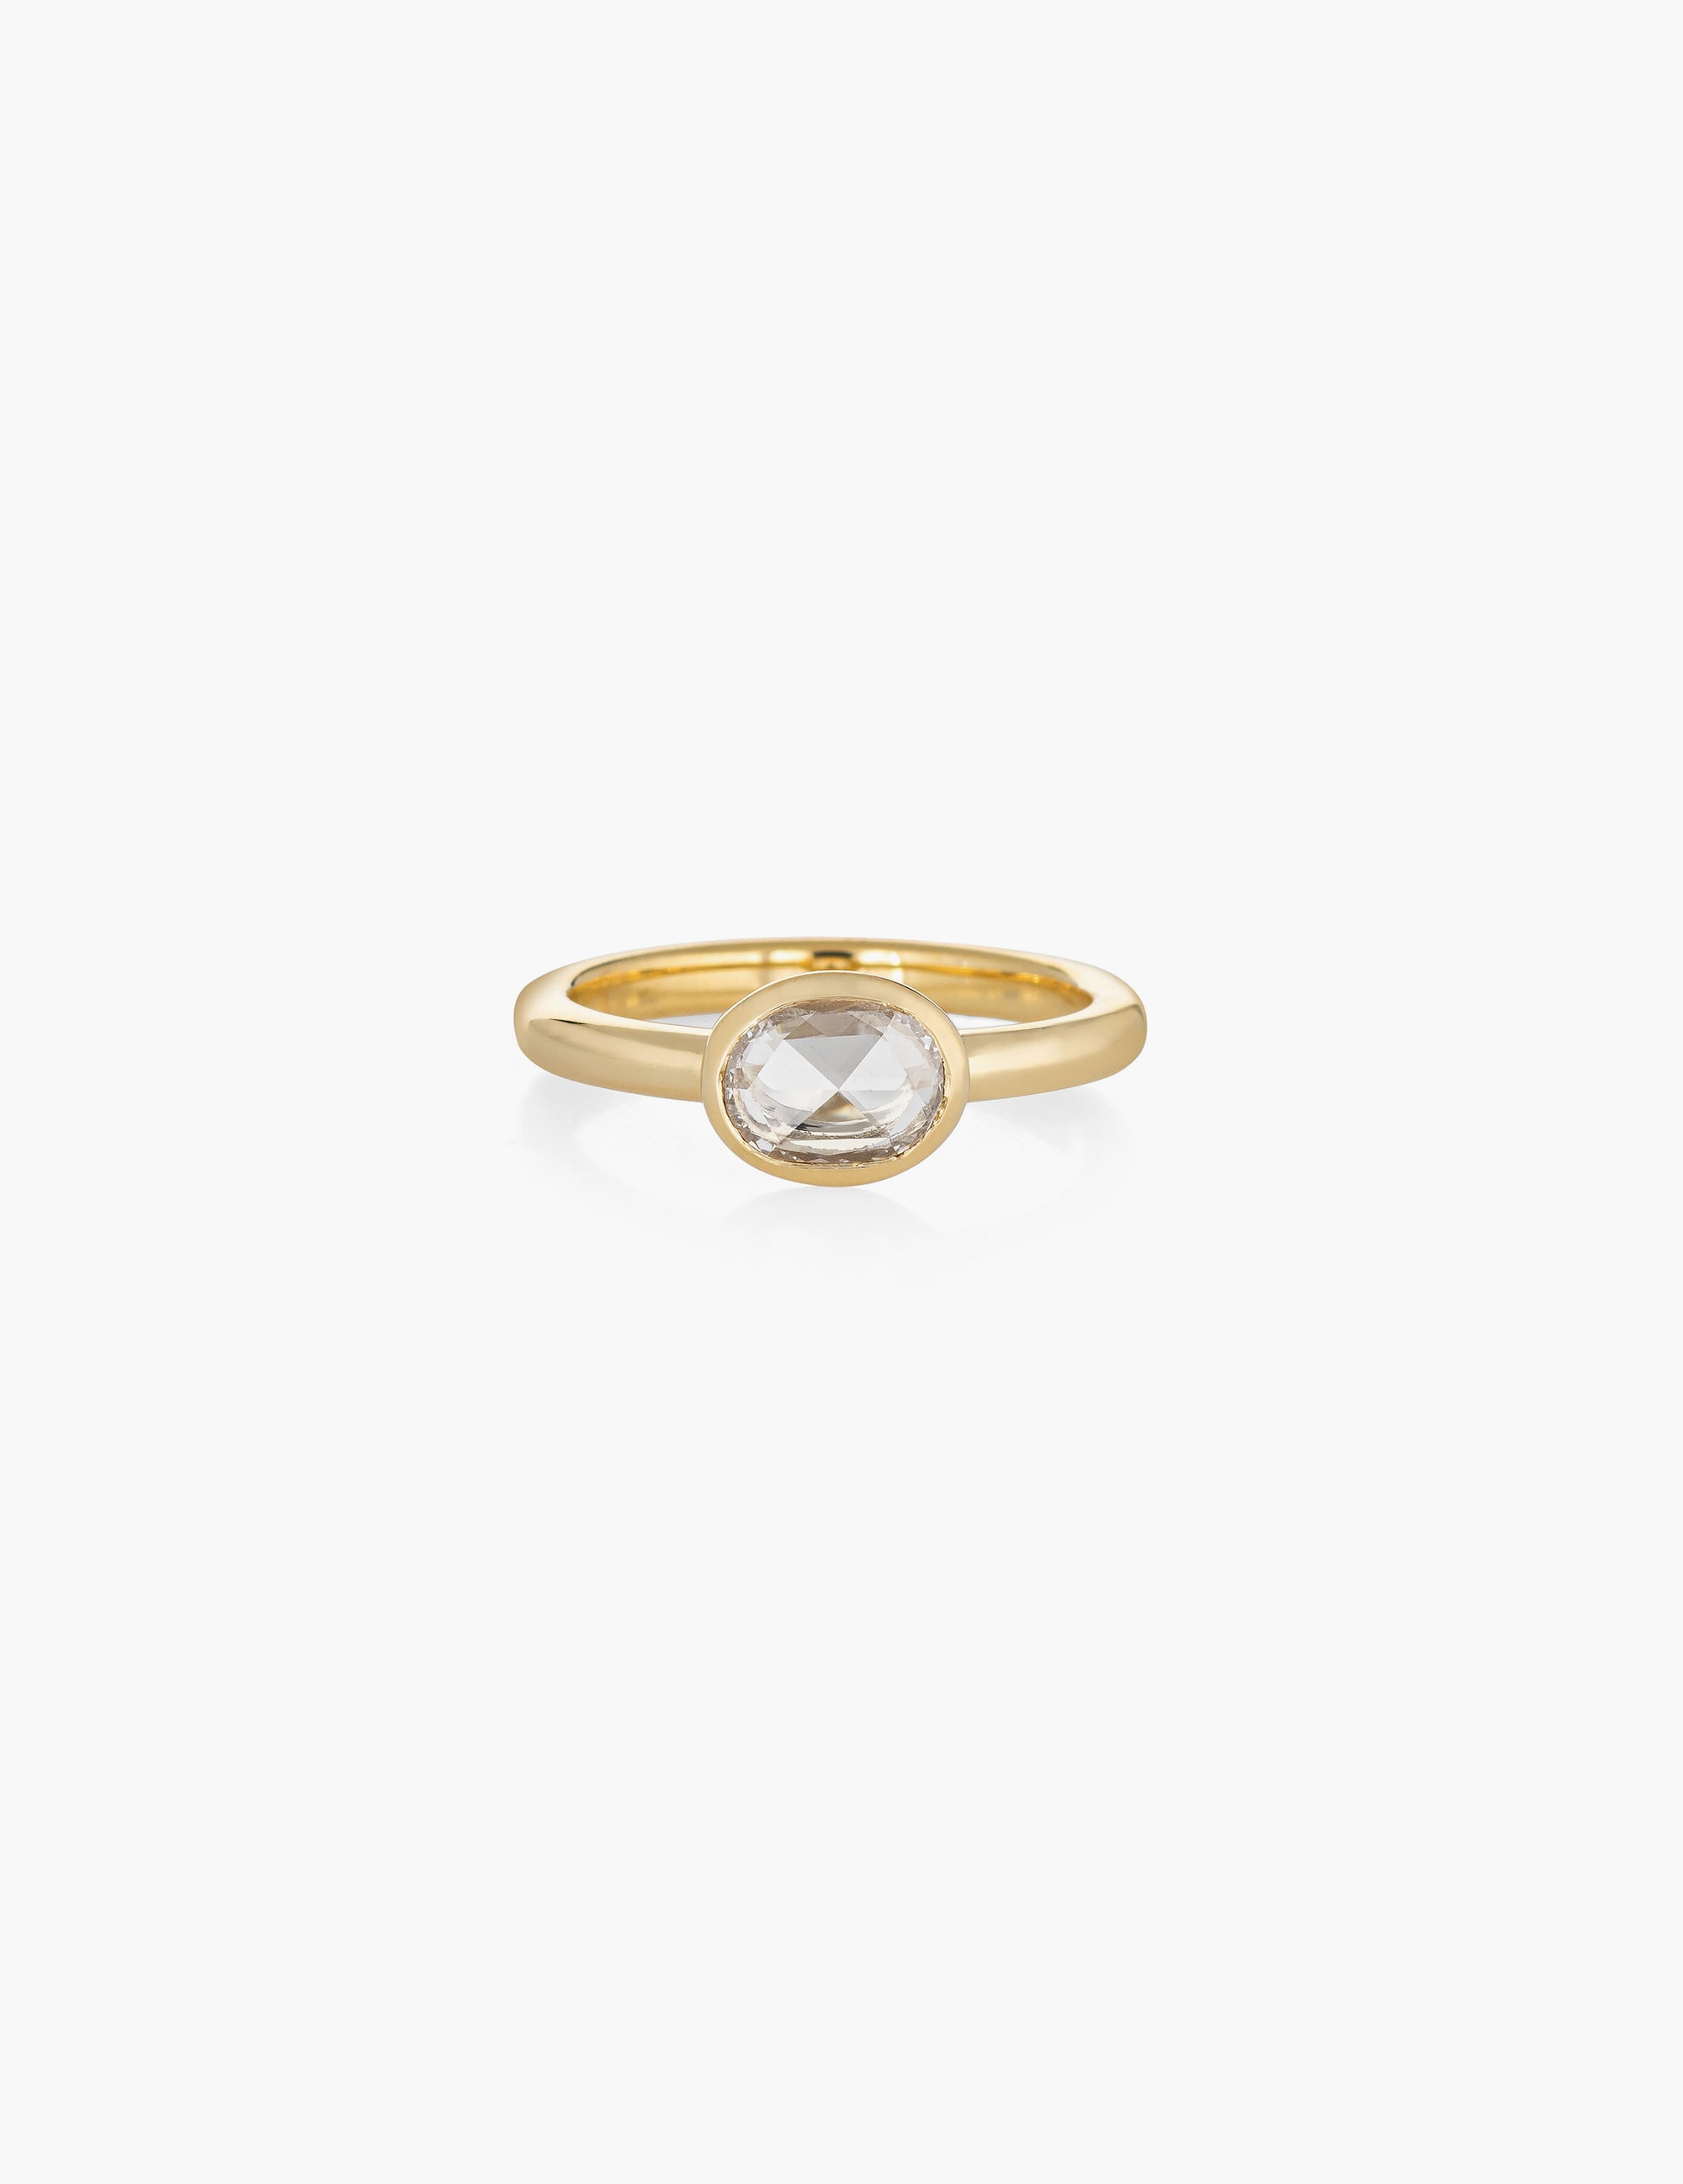 Oval Rose Cut Diamond Ring